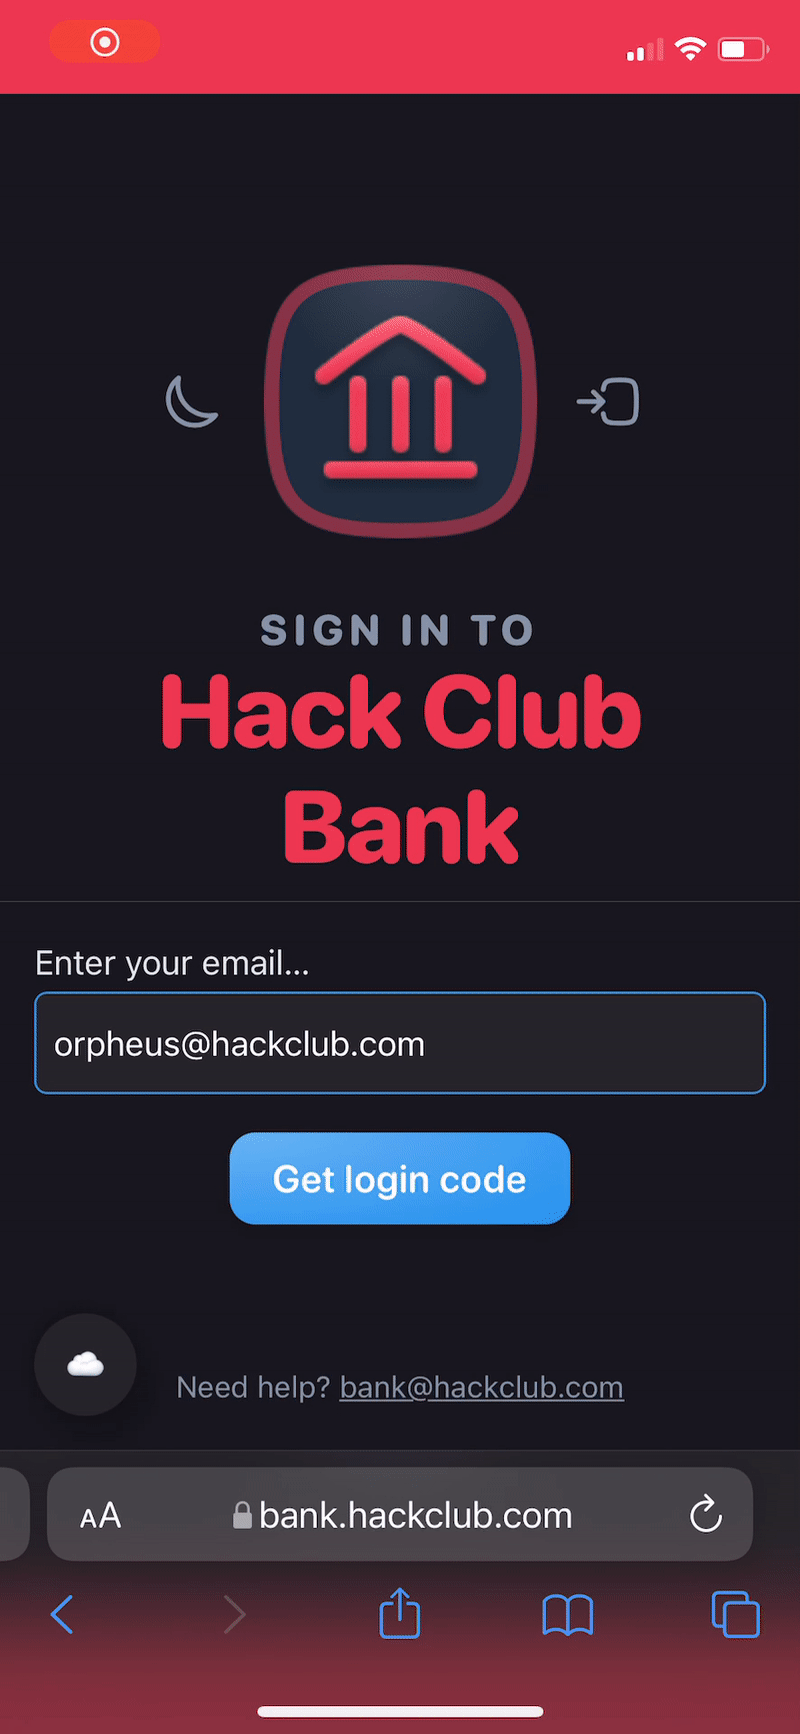 User signing in using SMS login code